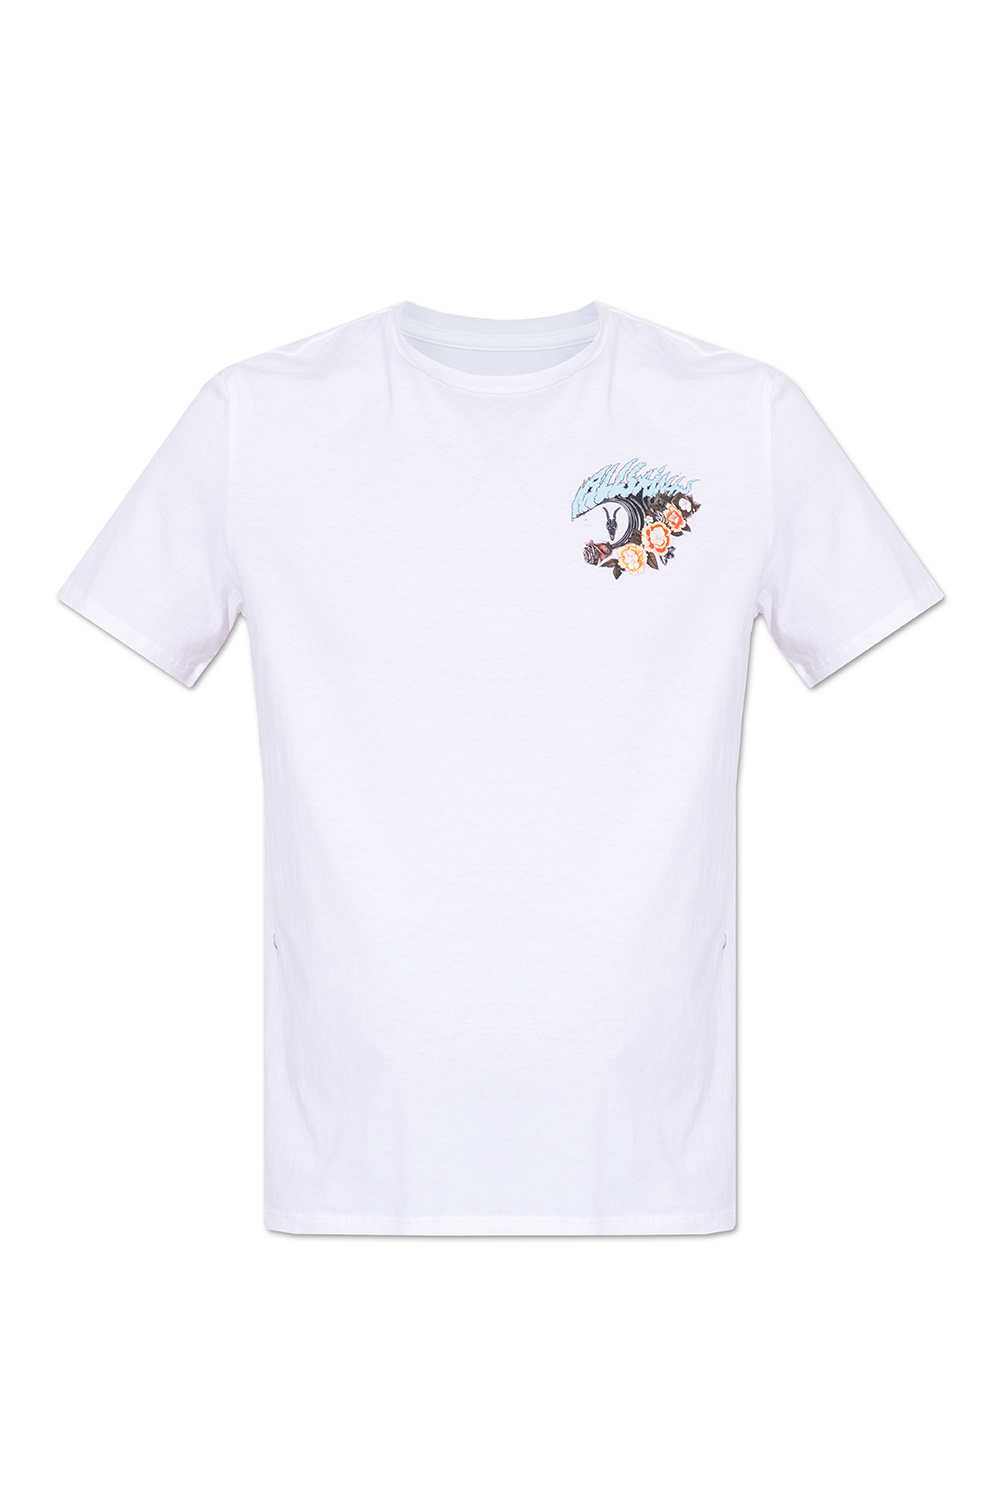 AllSaints ‘Pitch’ T-shirt